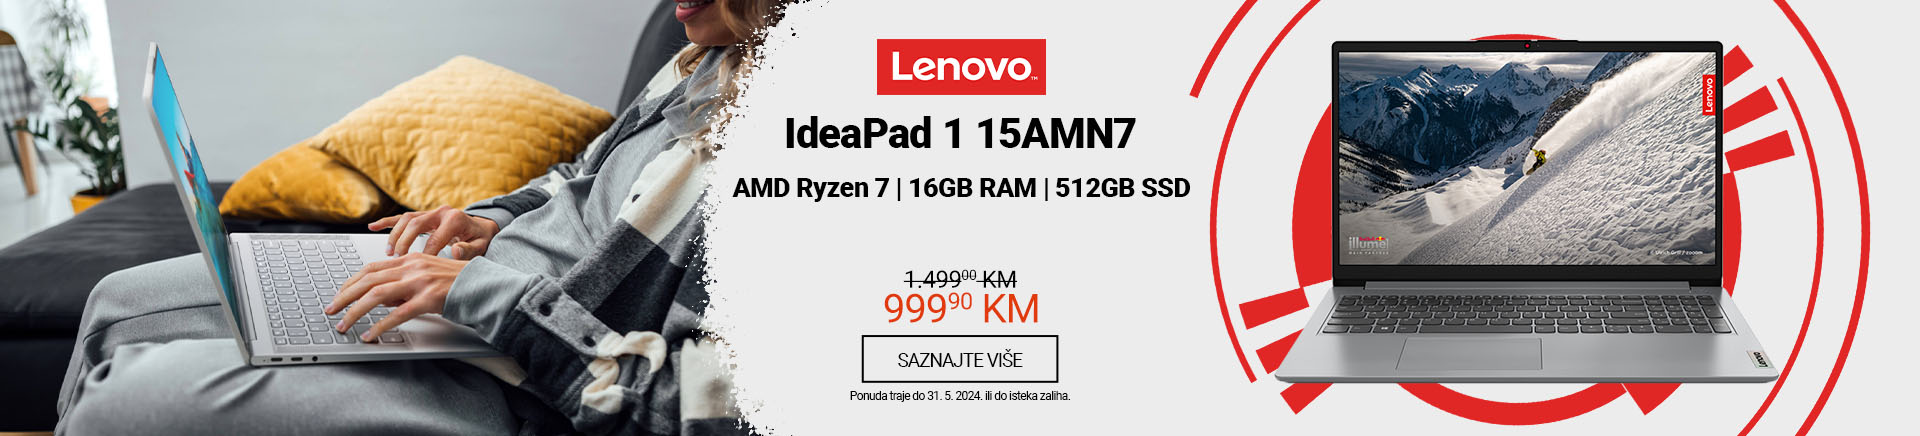 BA~Lenovo IdeaPad 1 15AMN7 MOBILE 380 X 436 NC.jpg